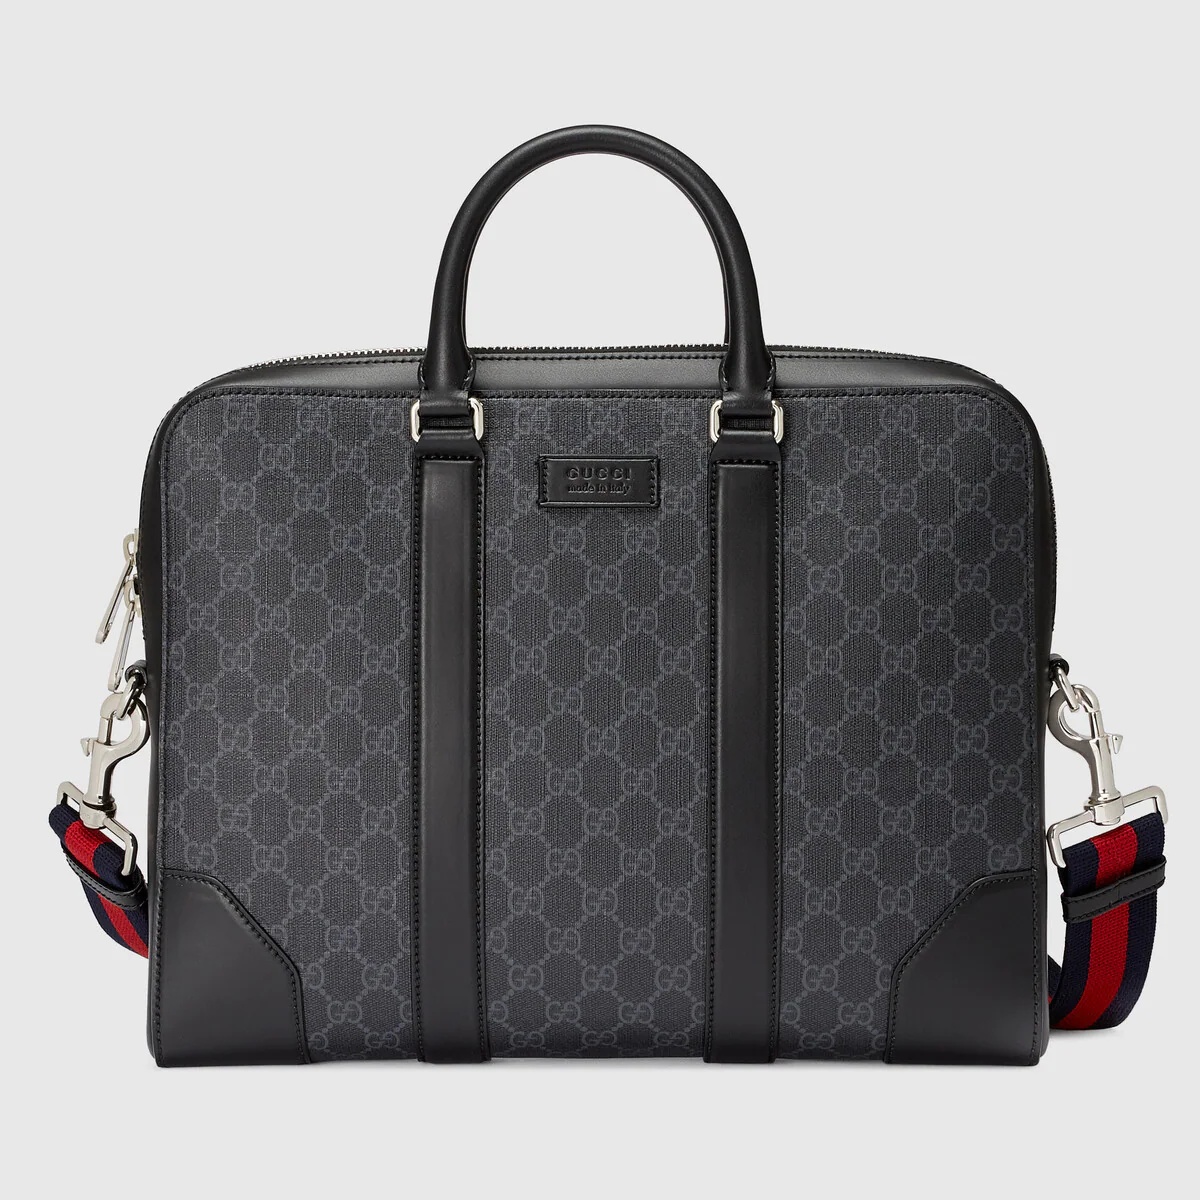 GG Black briefcase - 1